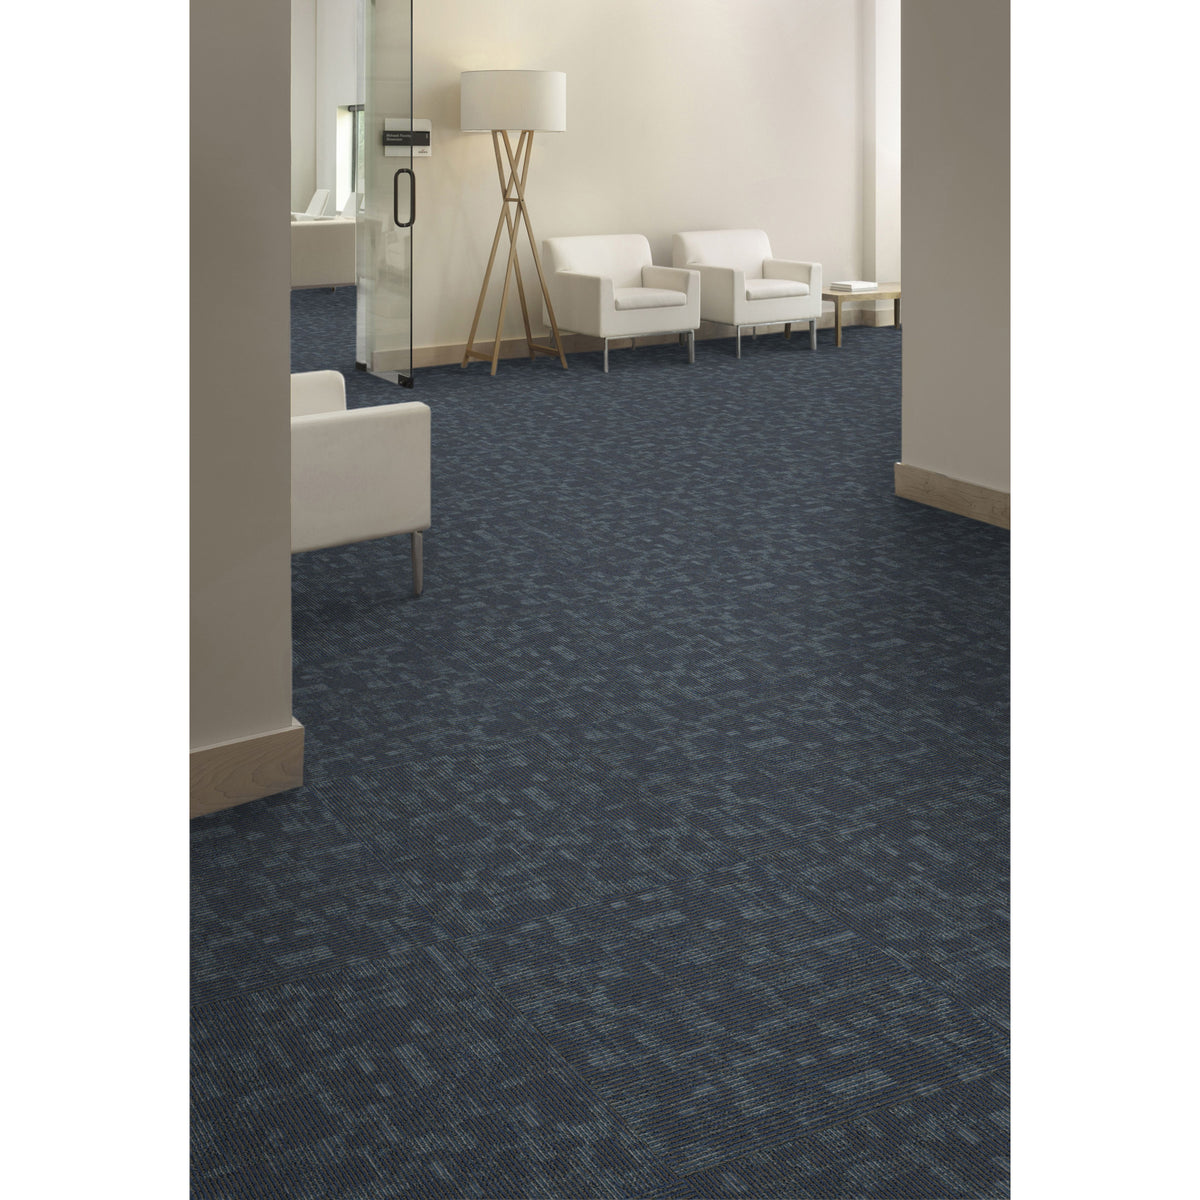 Aladdin Commercial - Cognitive Plank - Cool Calm - Carpet Tile - Perception - Room Scene